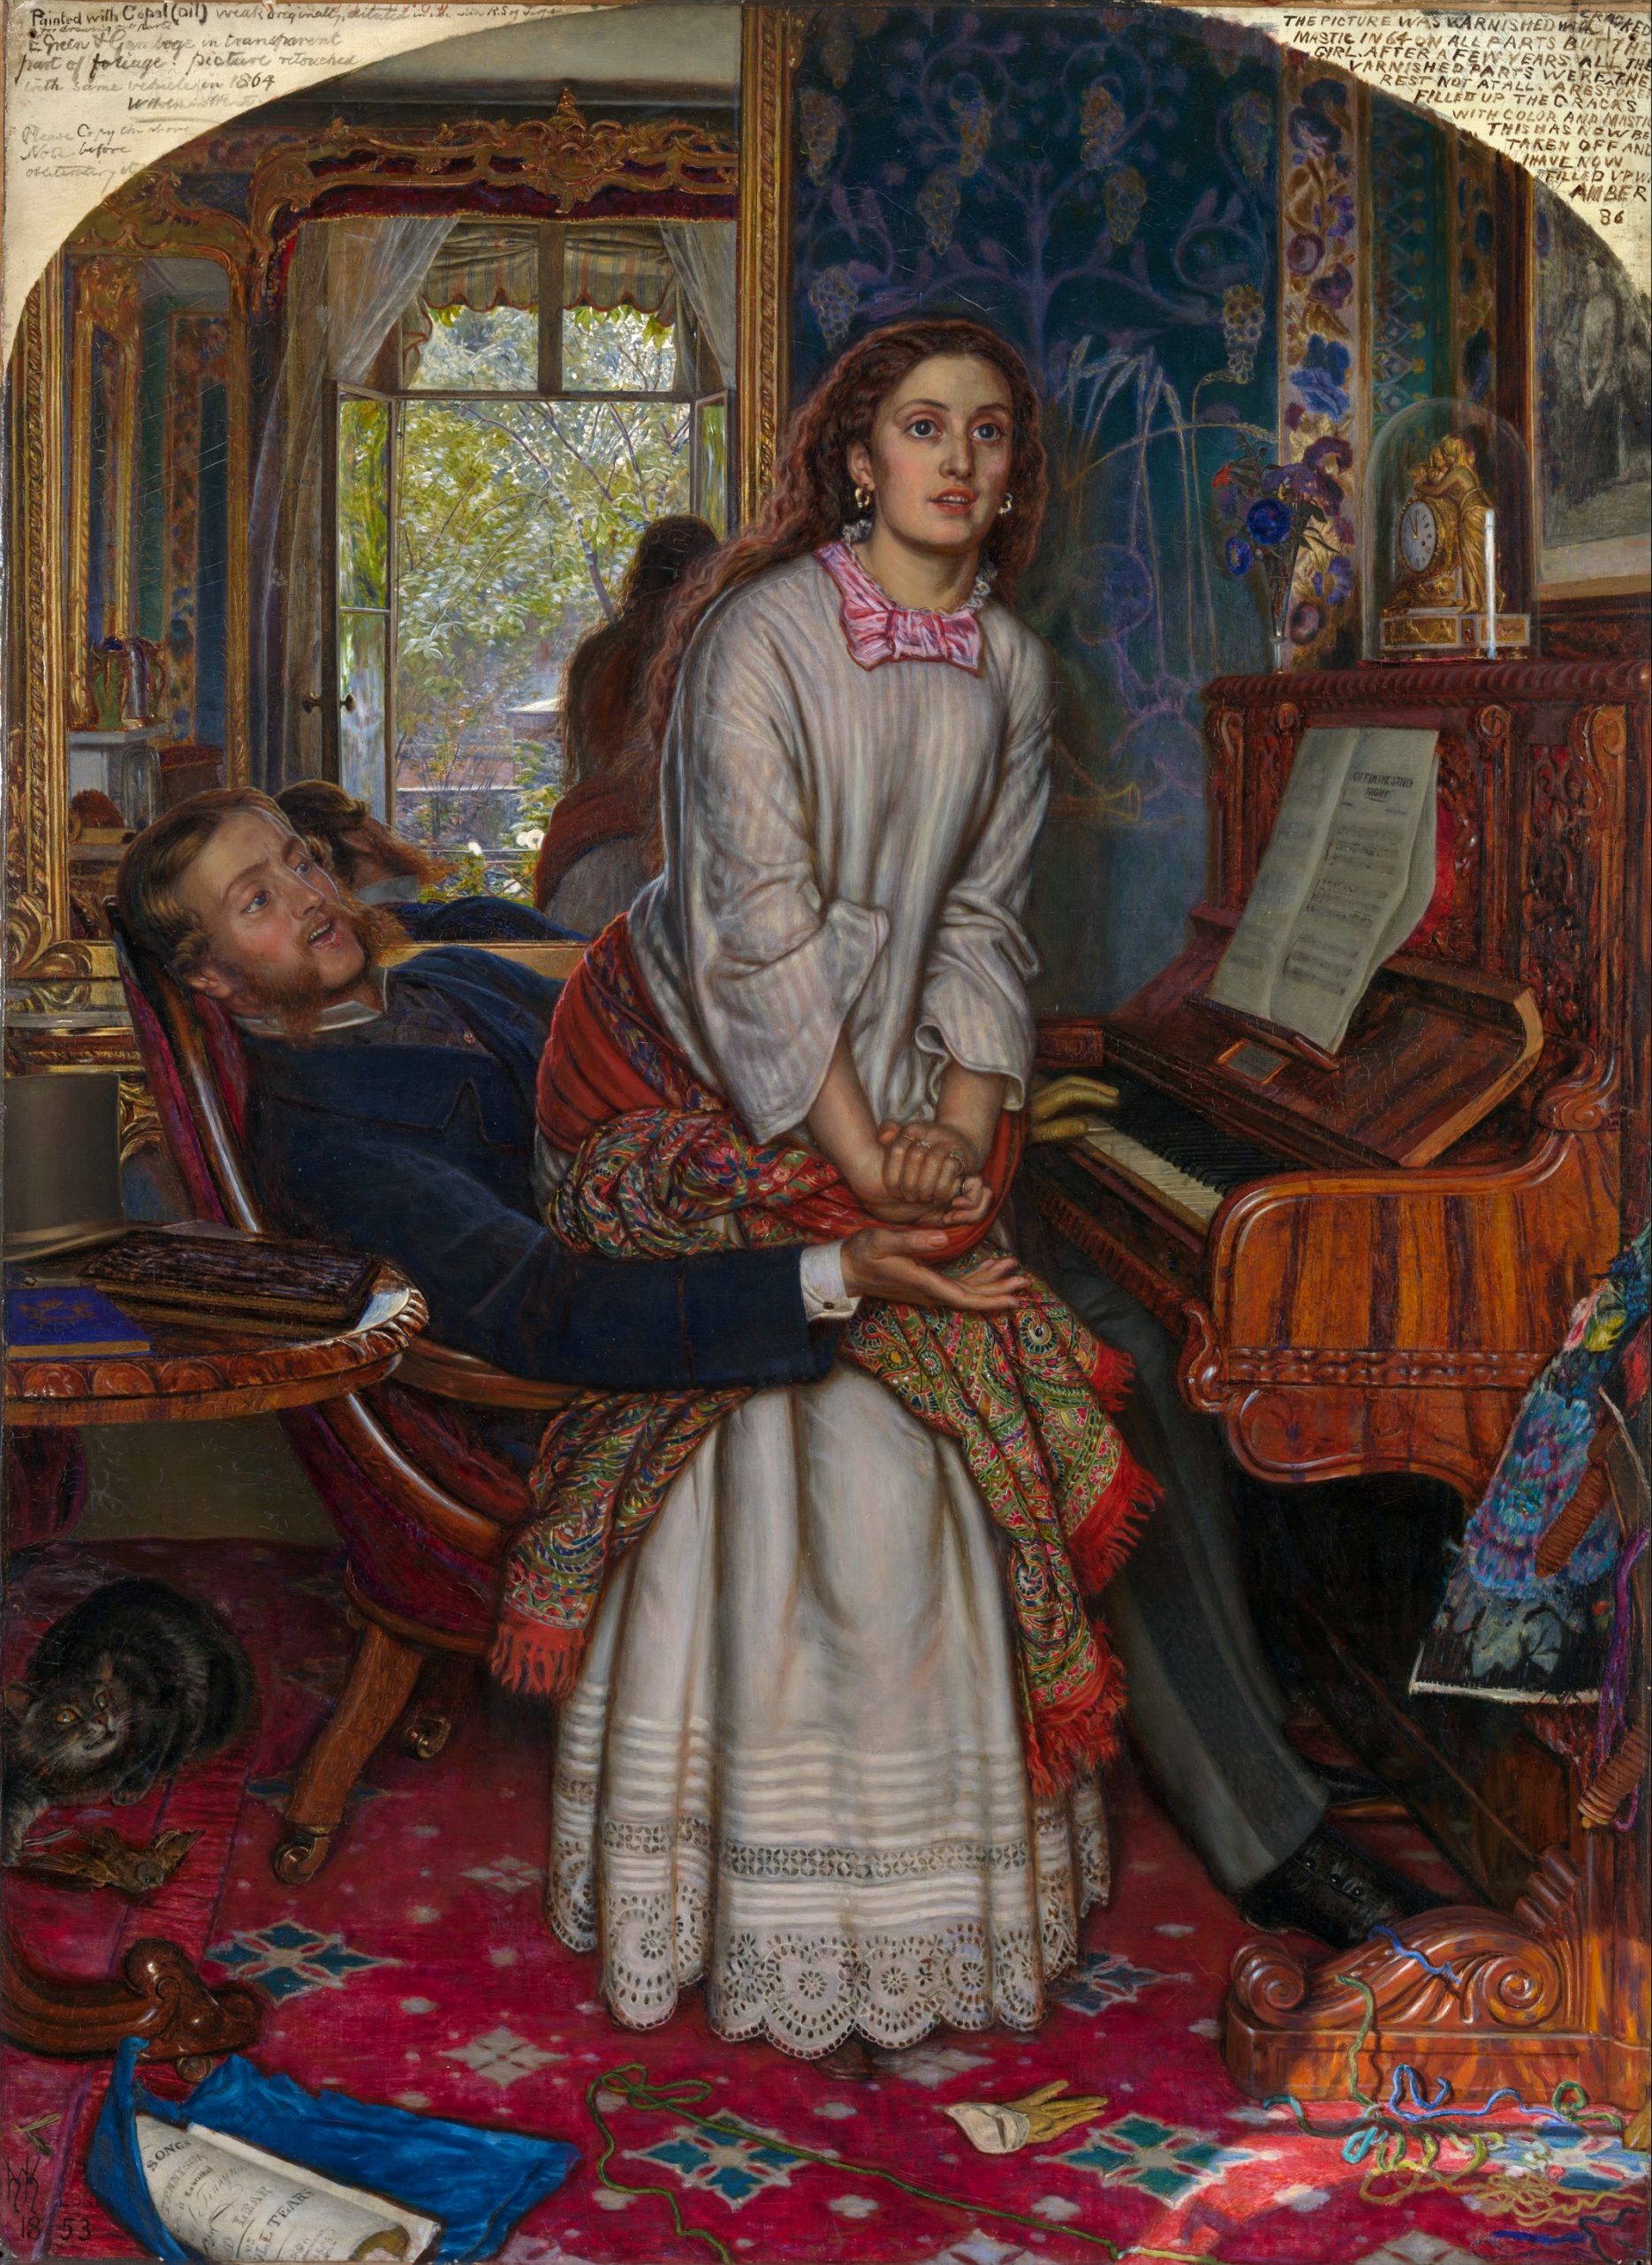 Holman Hunt painting